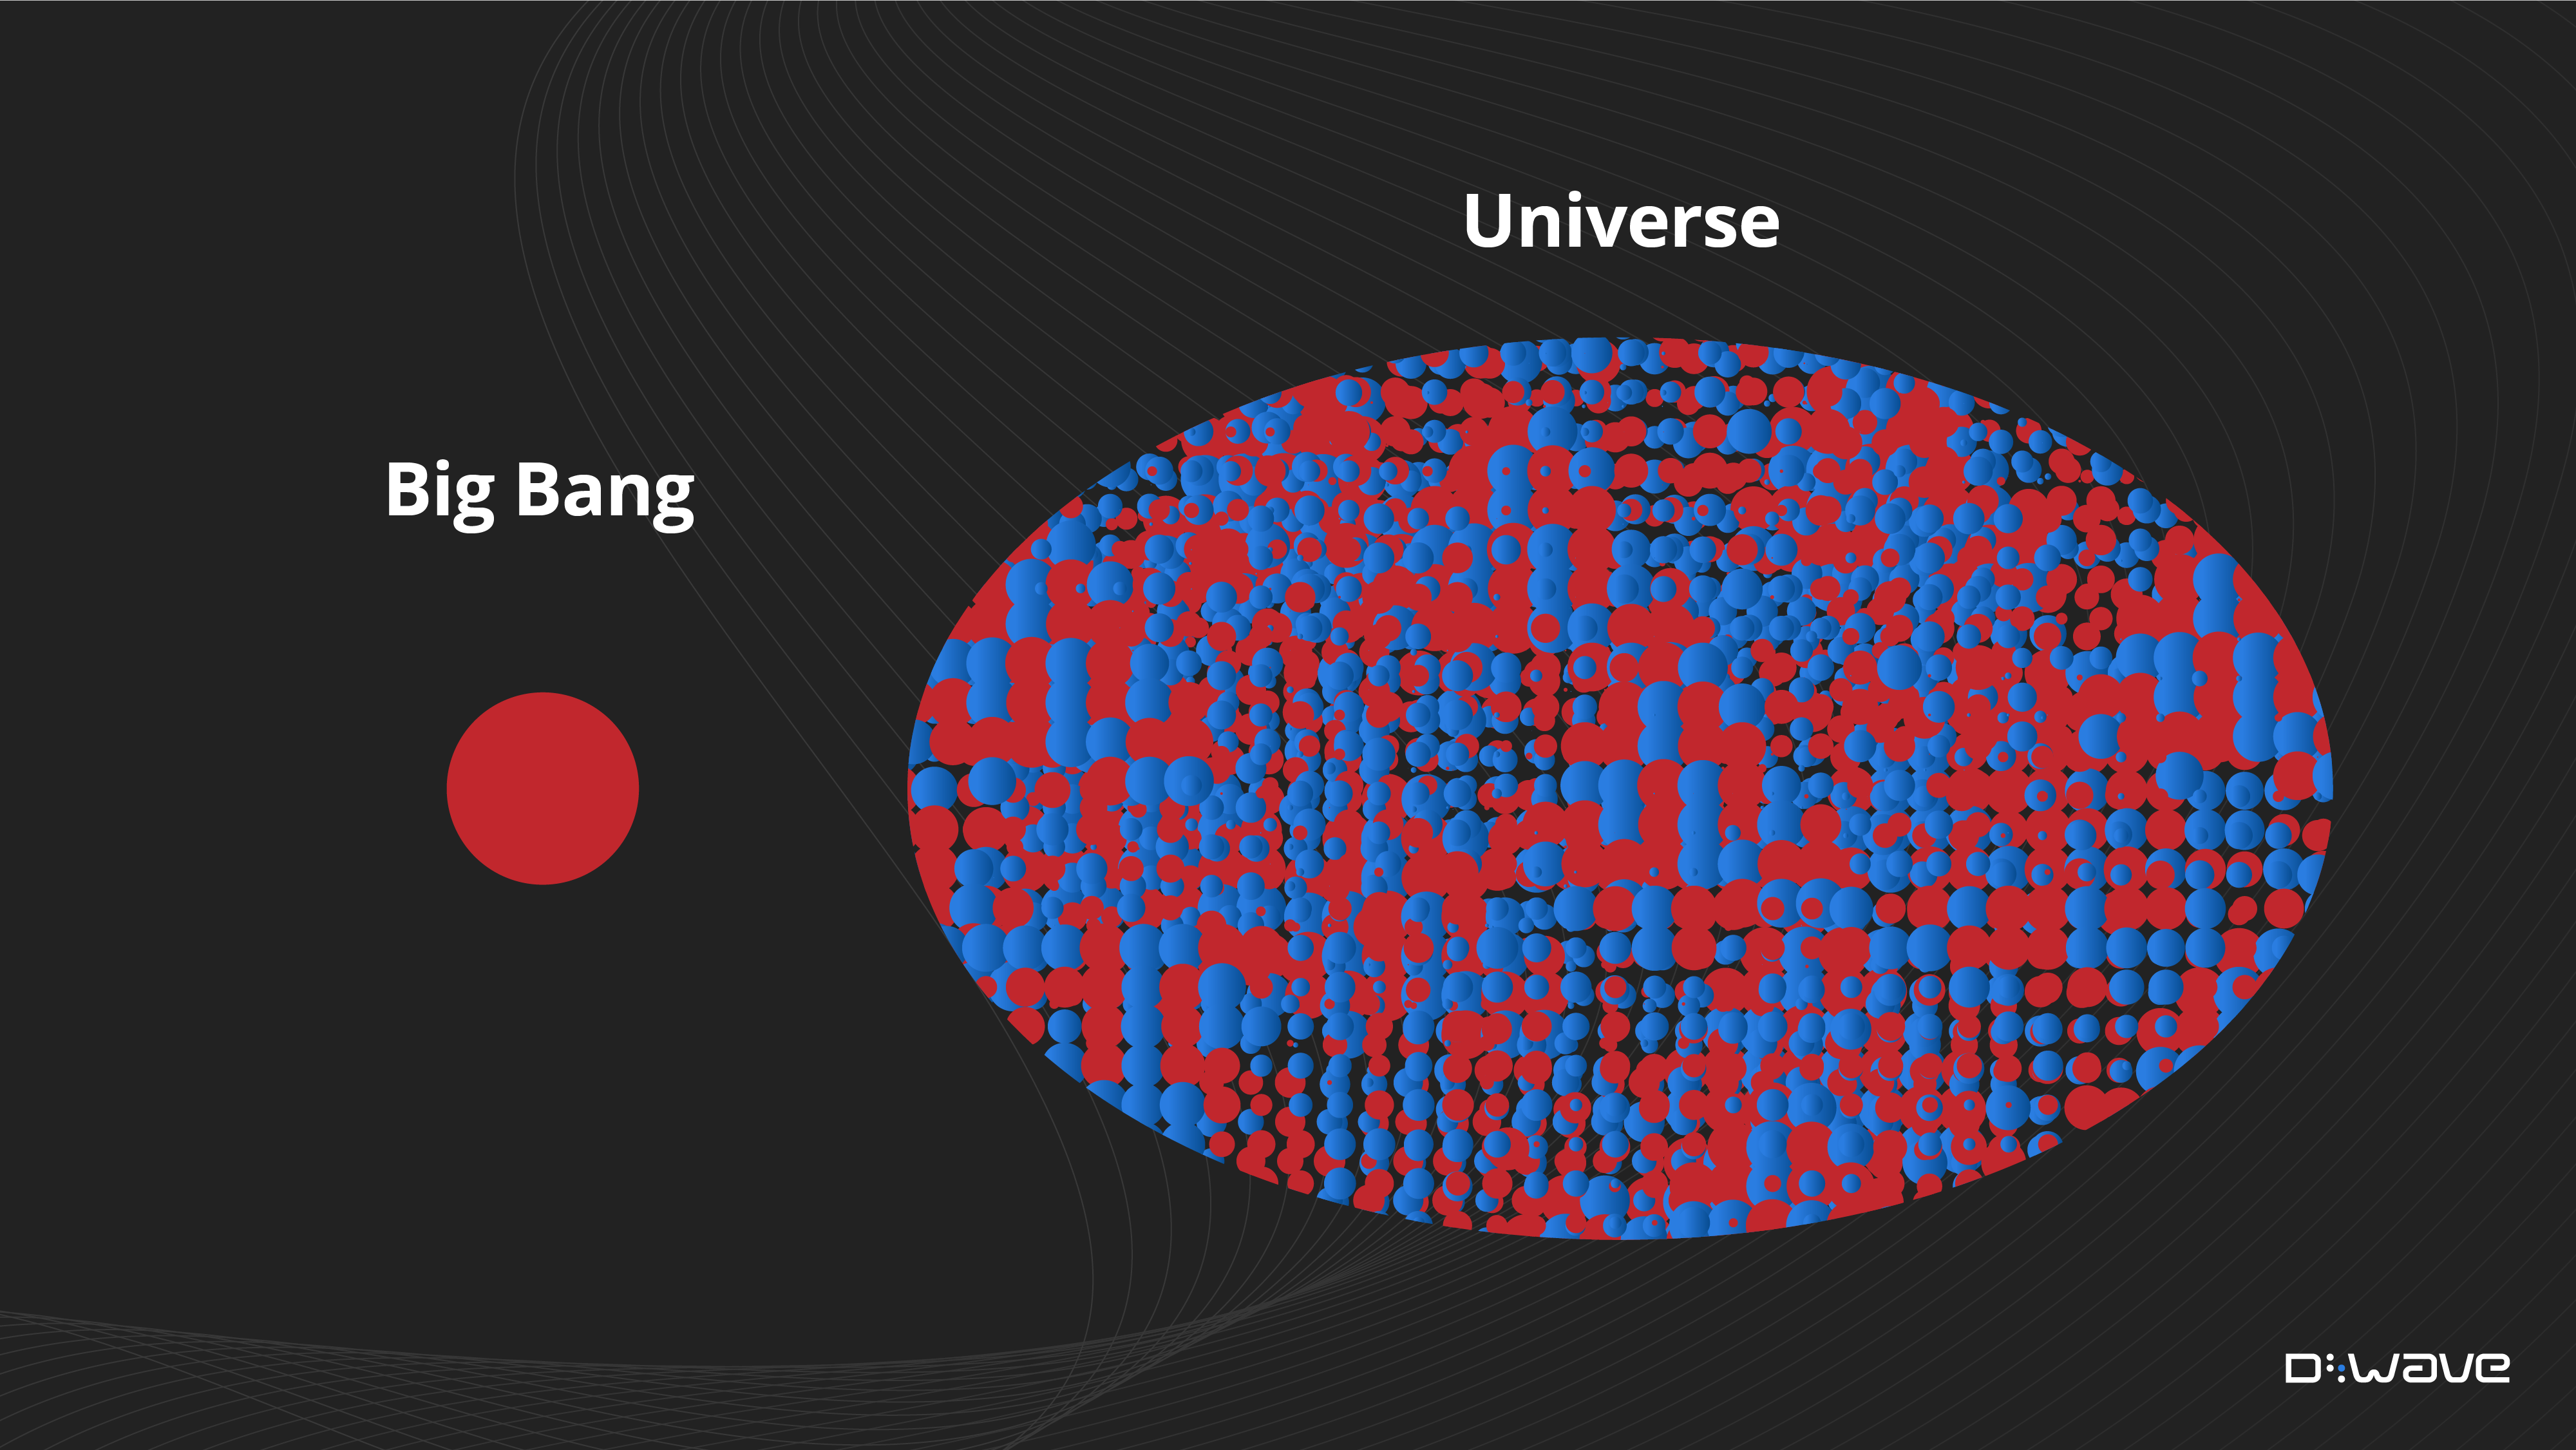 Big bang to Current Universe